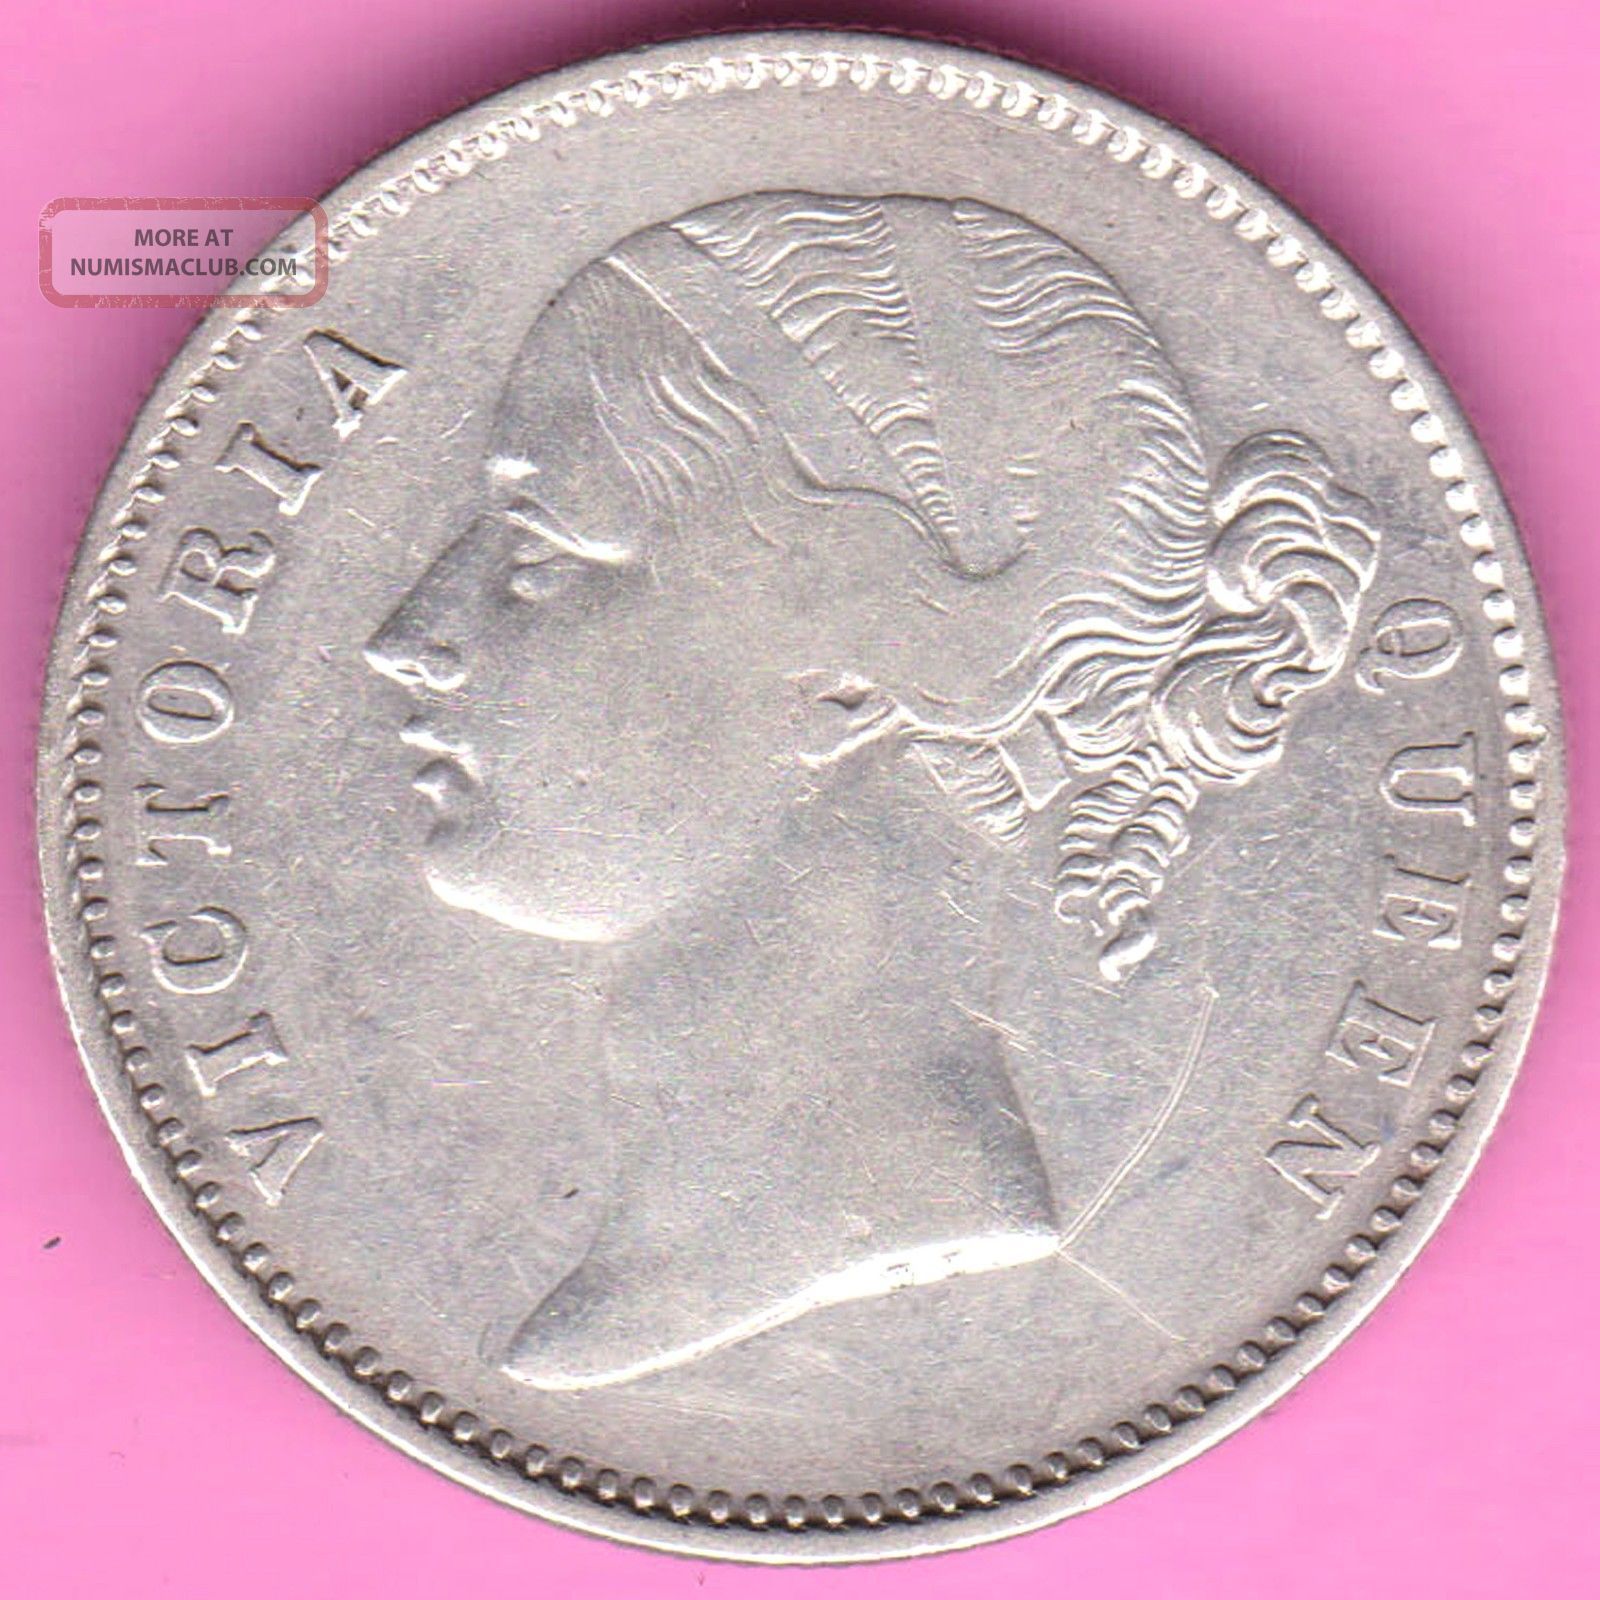 British India - 1840 - Divided Legend - One Rupee - Victoria - Rarest Silver Coin - 27 British photo